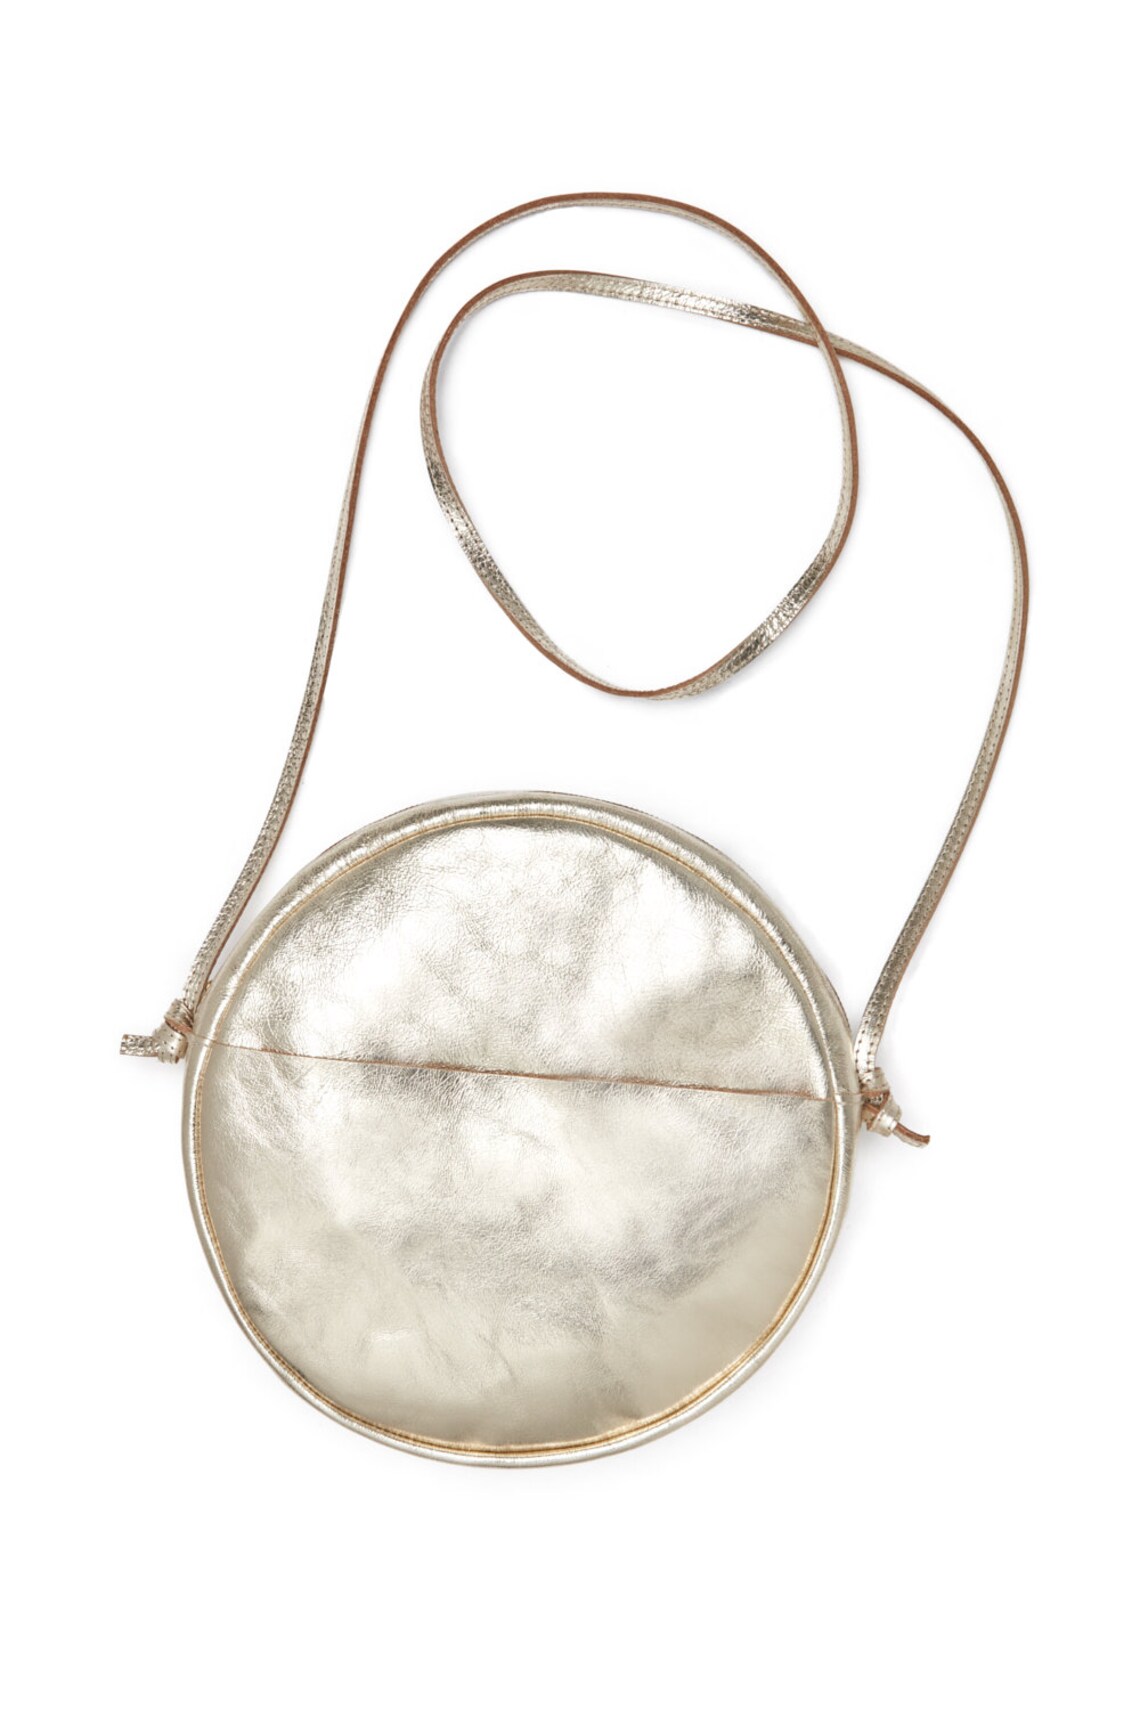 Round shoulder bag Leatherbag Moonbag Halfmoonbag Handbag | Etsy